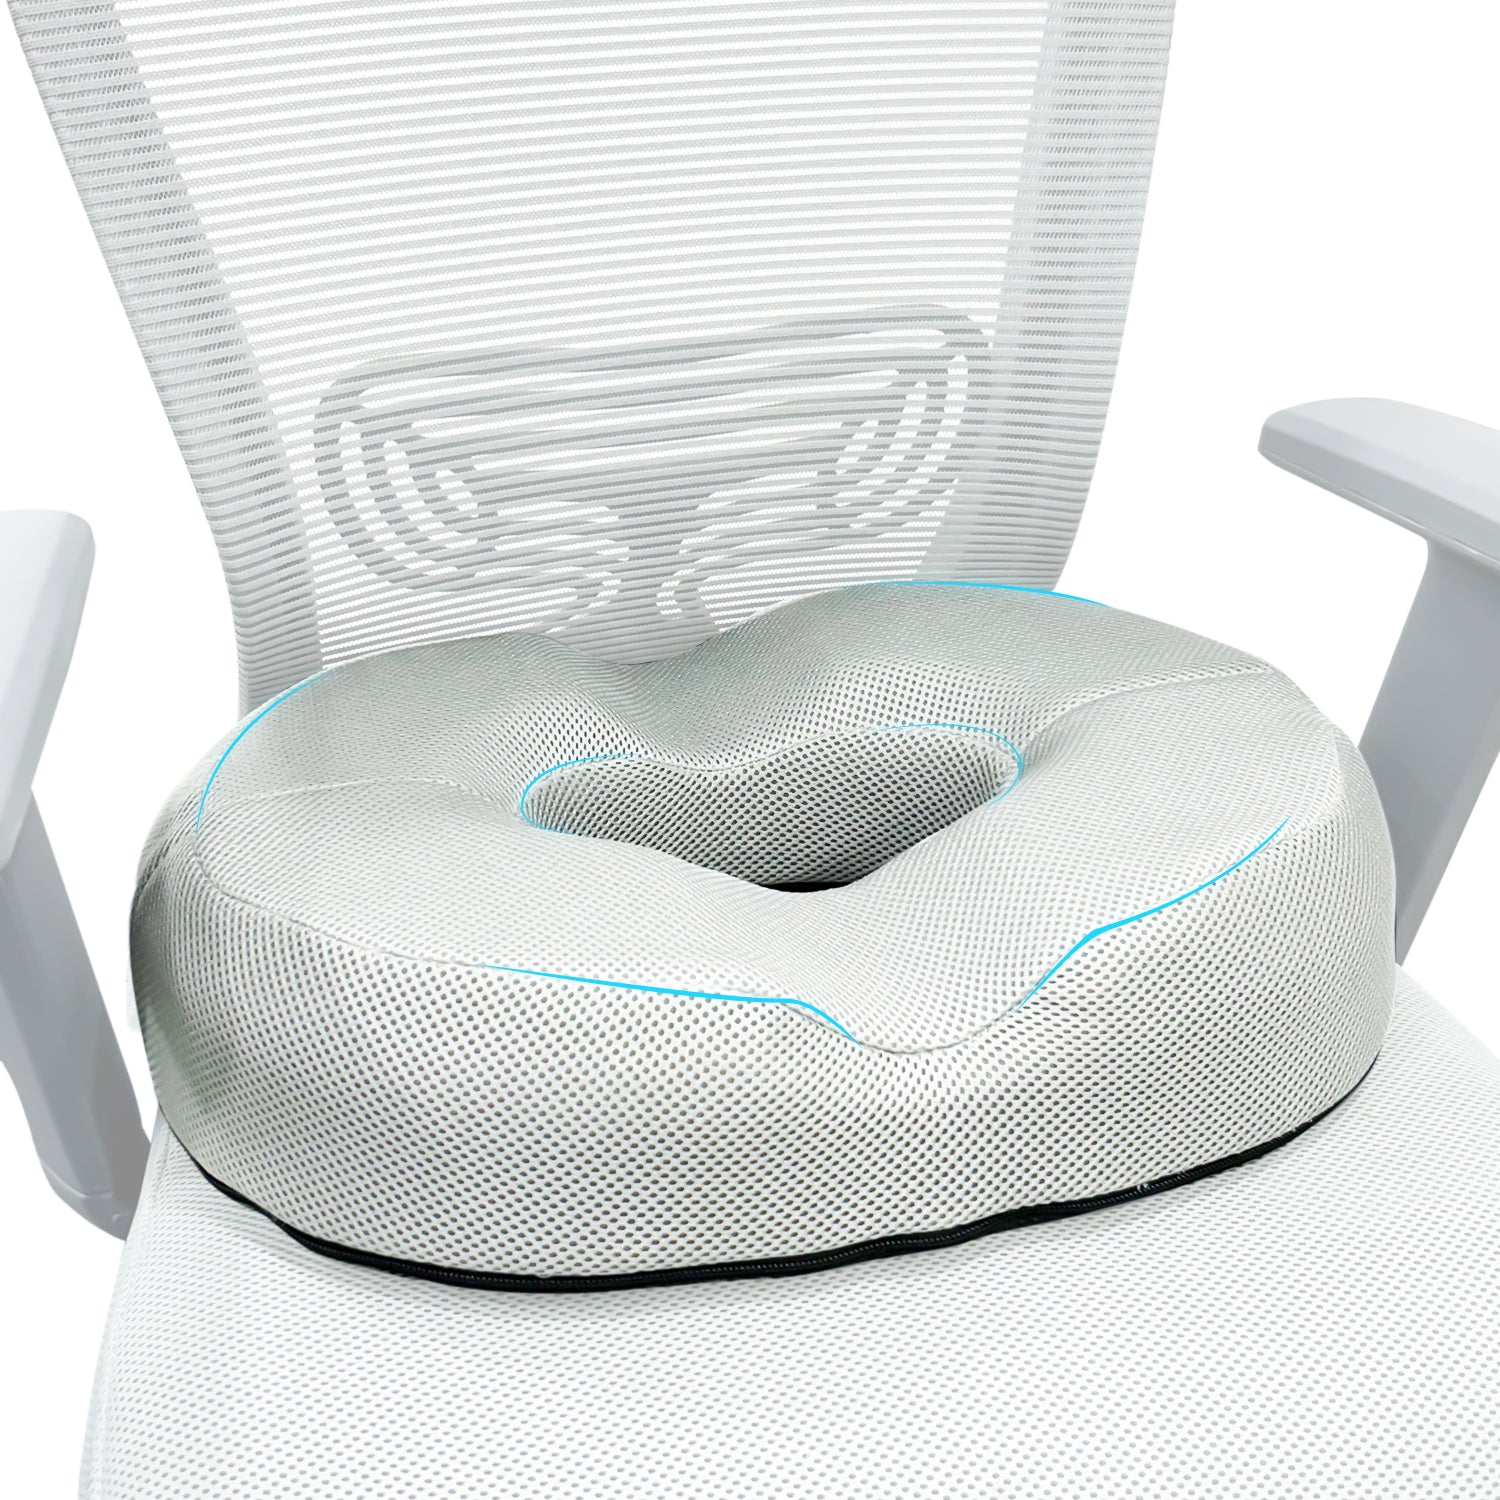 Orthopedic Gel Memory Foam Donut Seat Cushion for Tailbone, Sciatica & Back Pain Relief